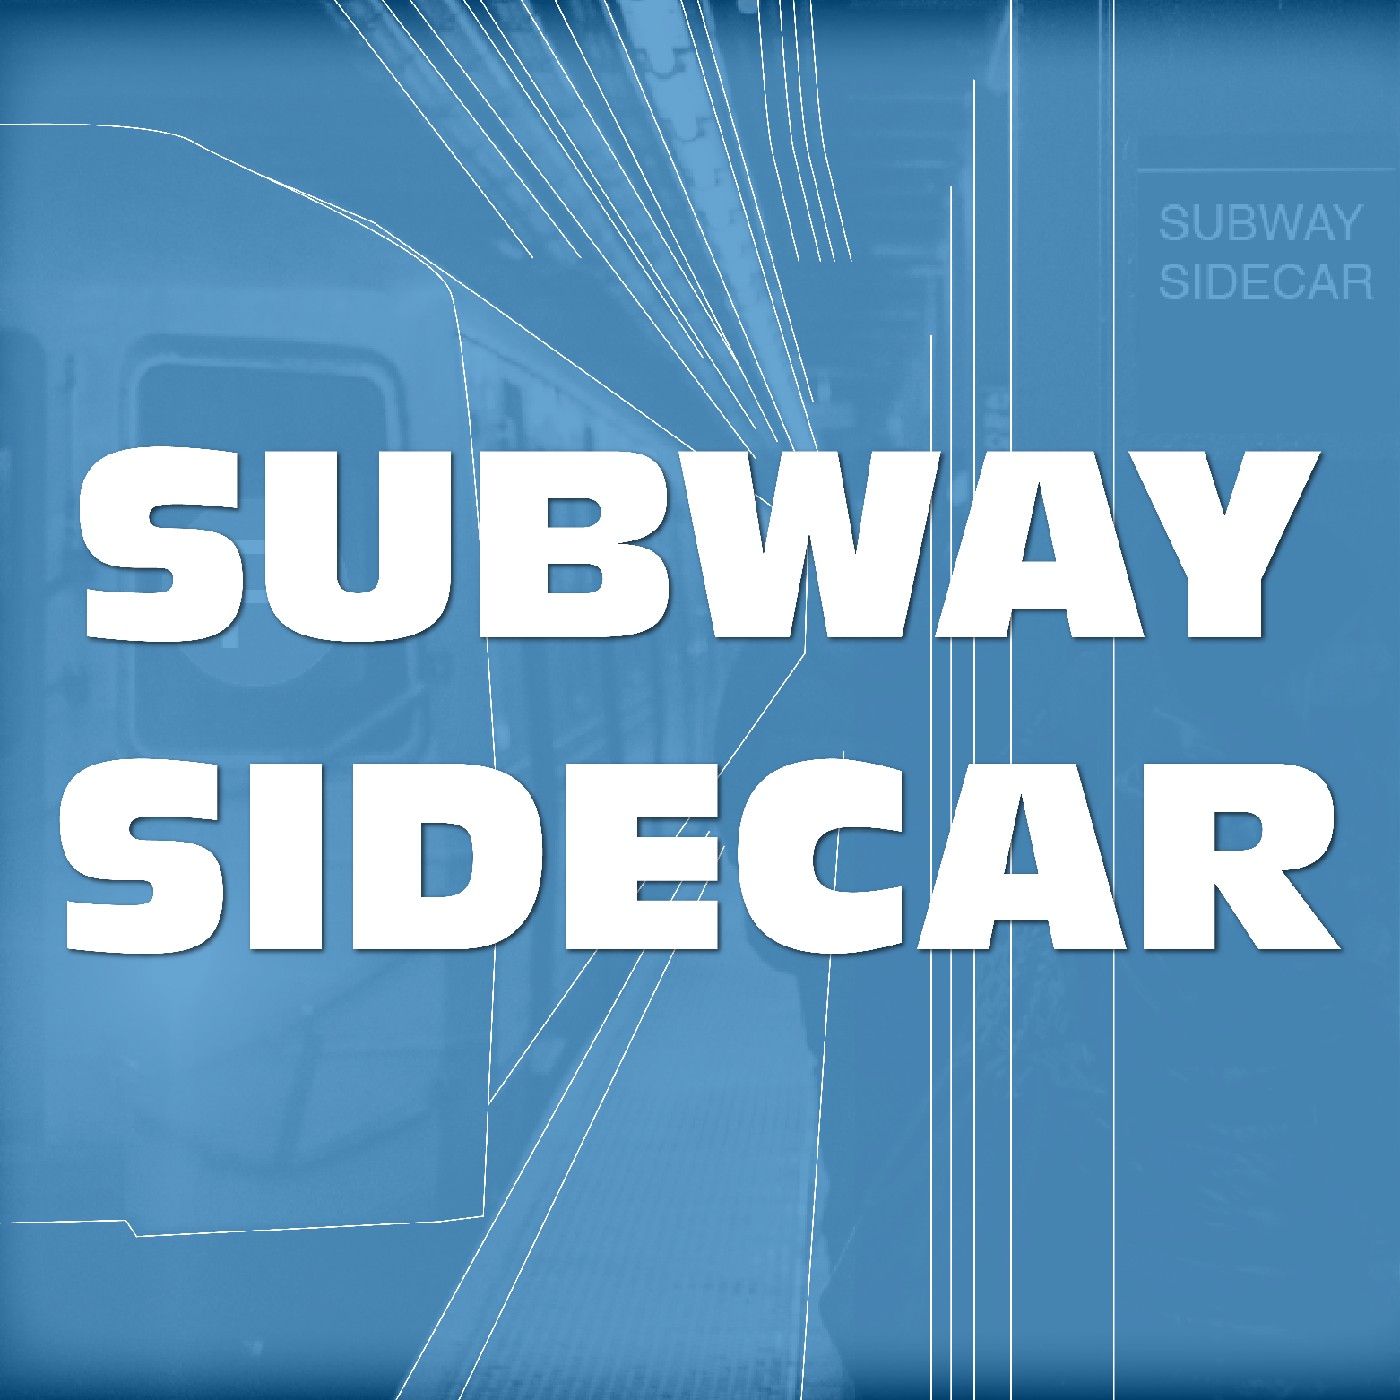 Subway Sidecar